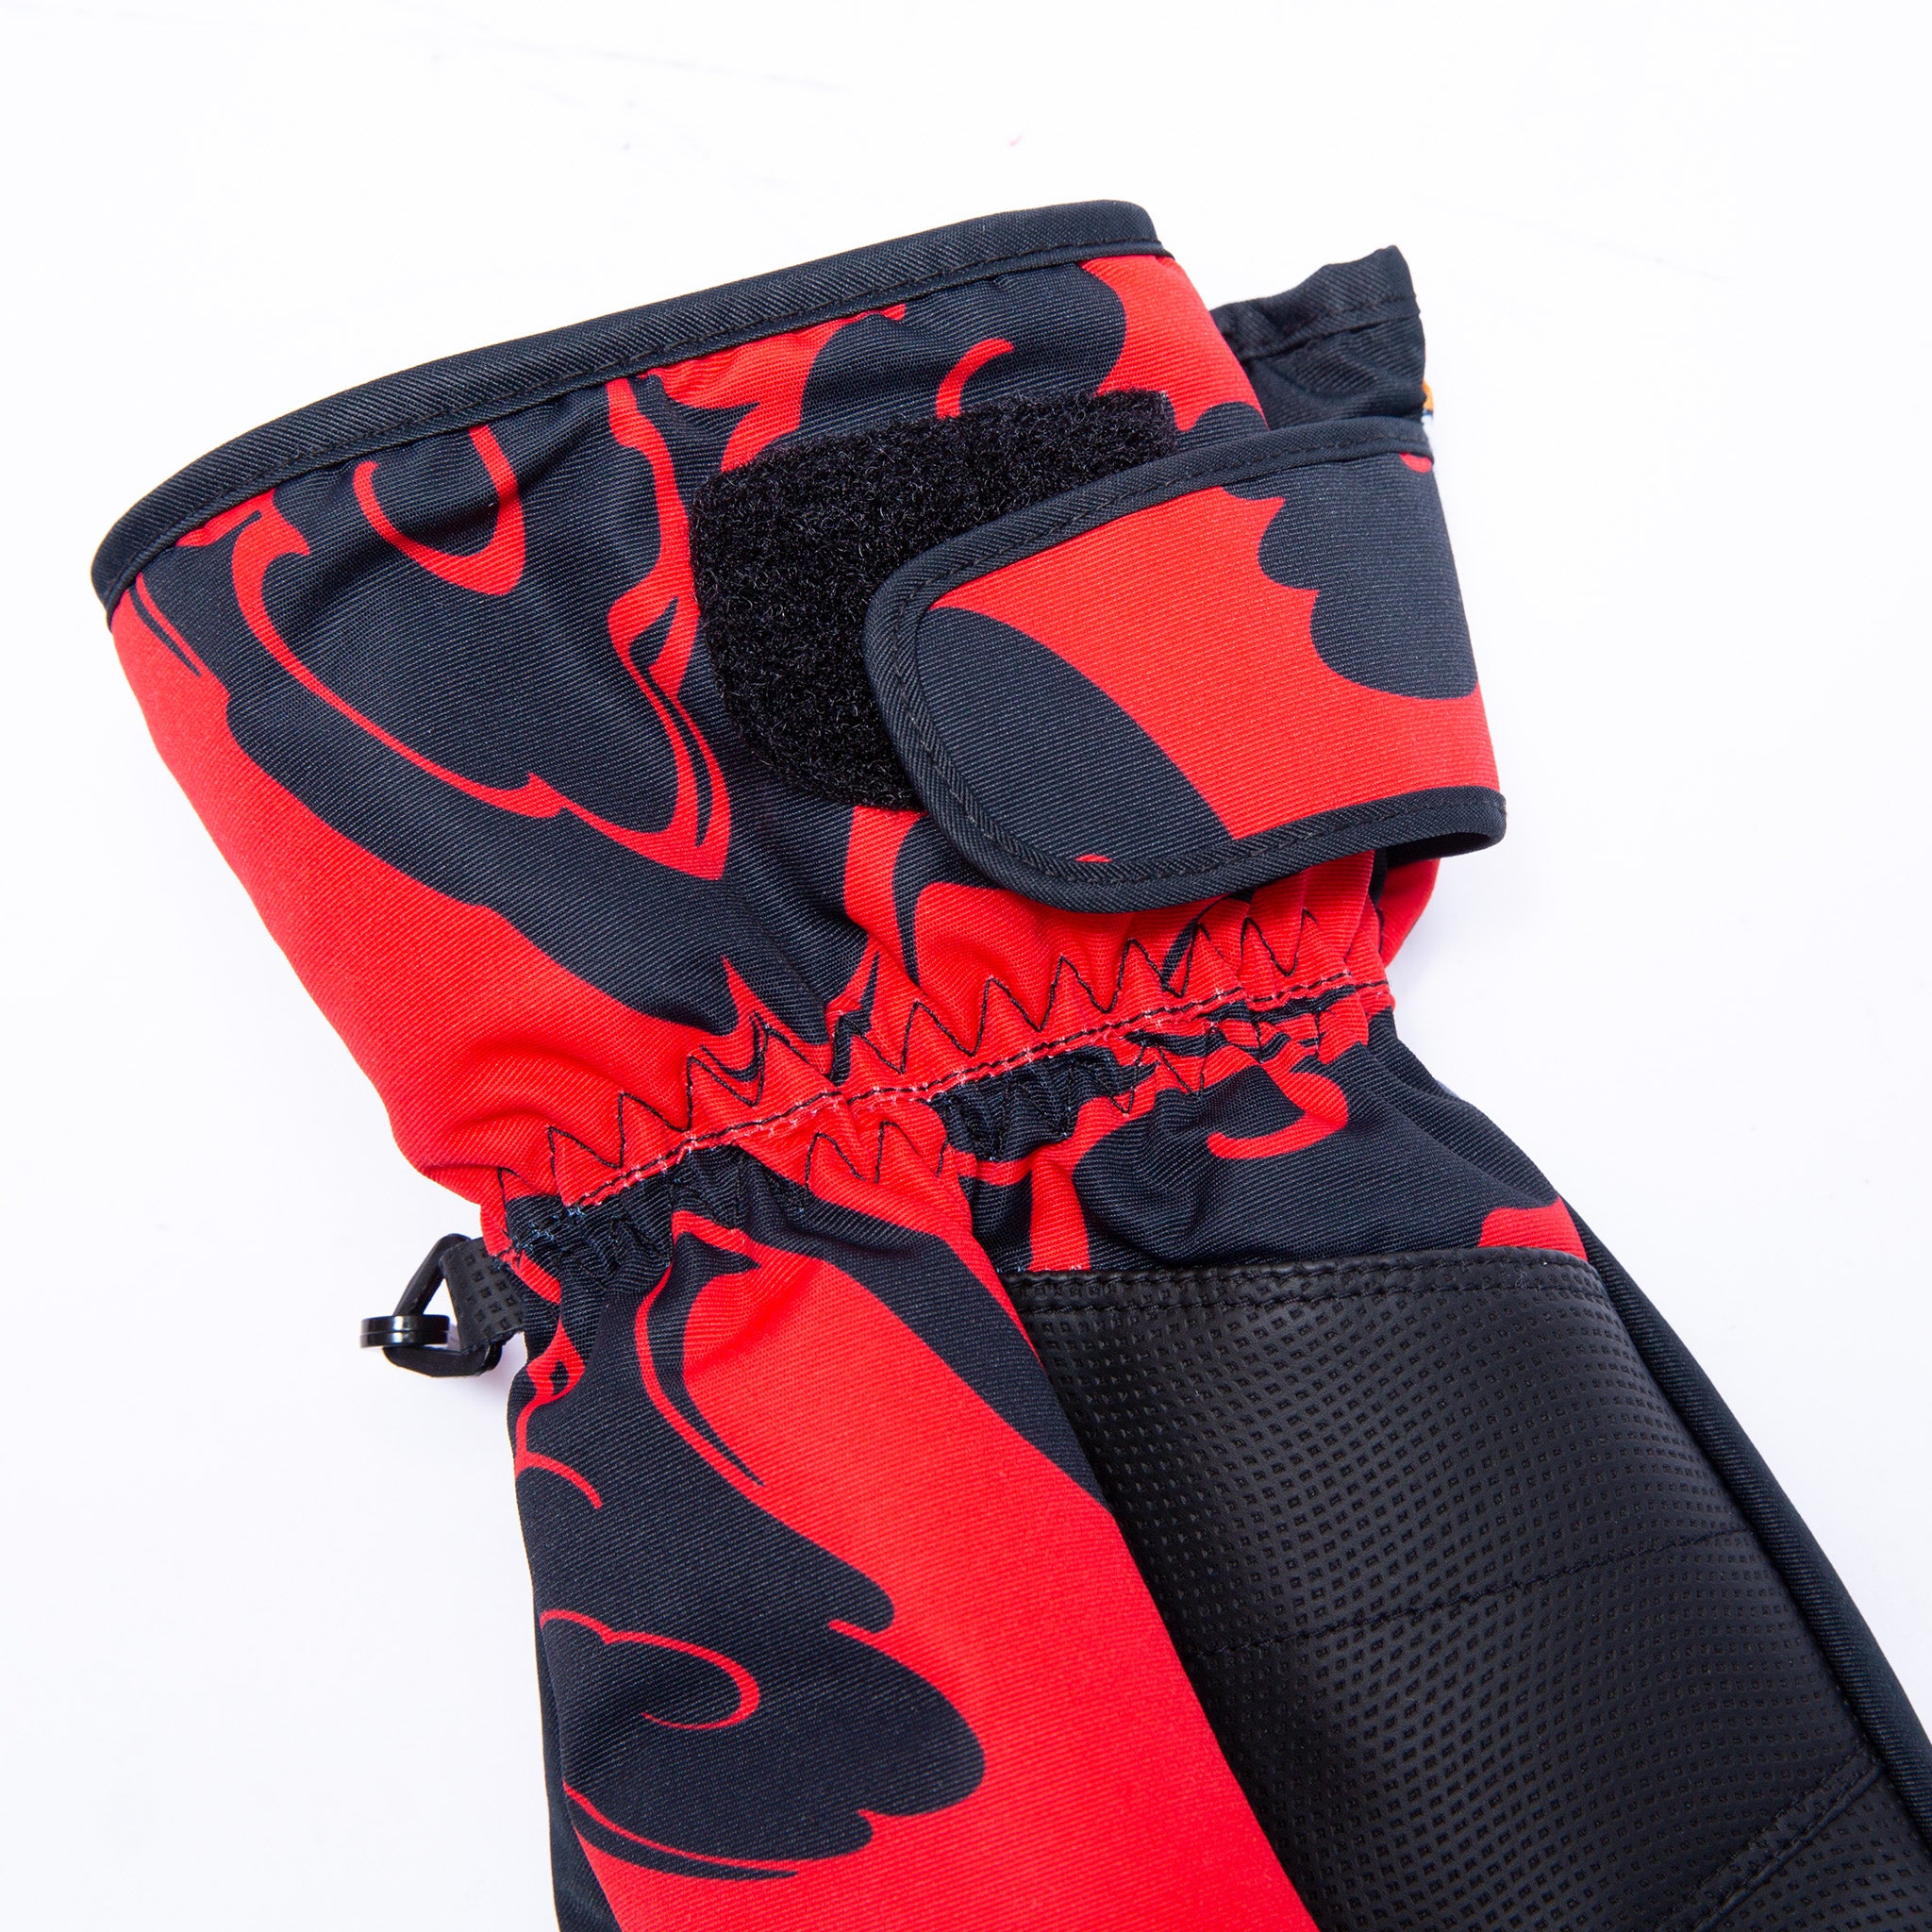 Dragonerm Snow Gloves (Red)